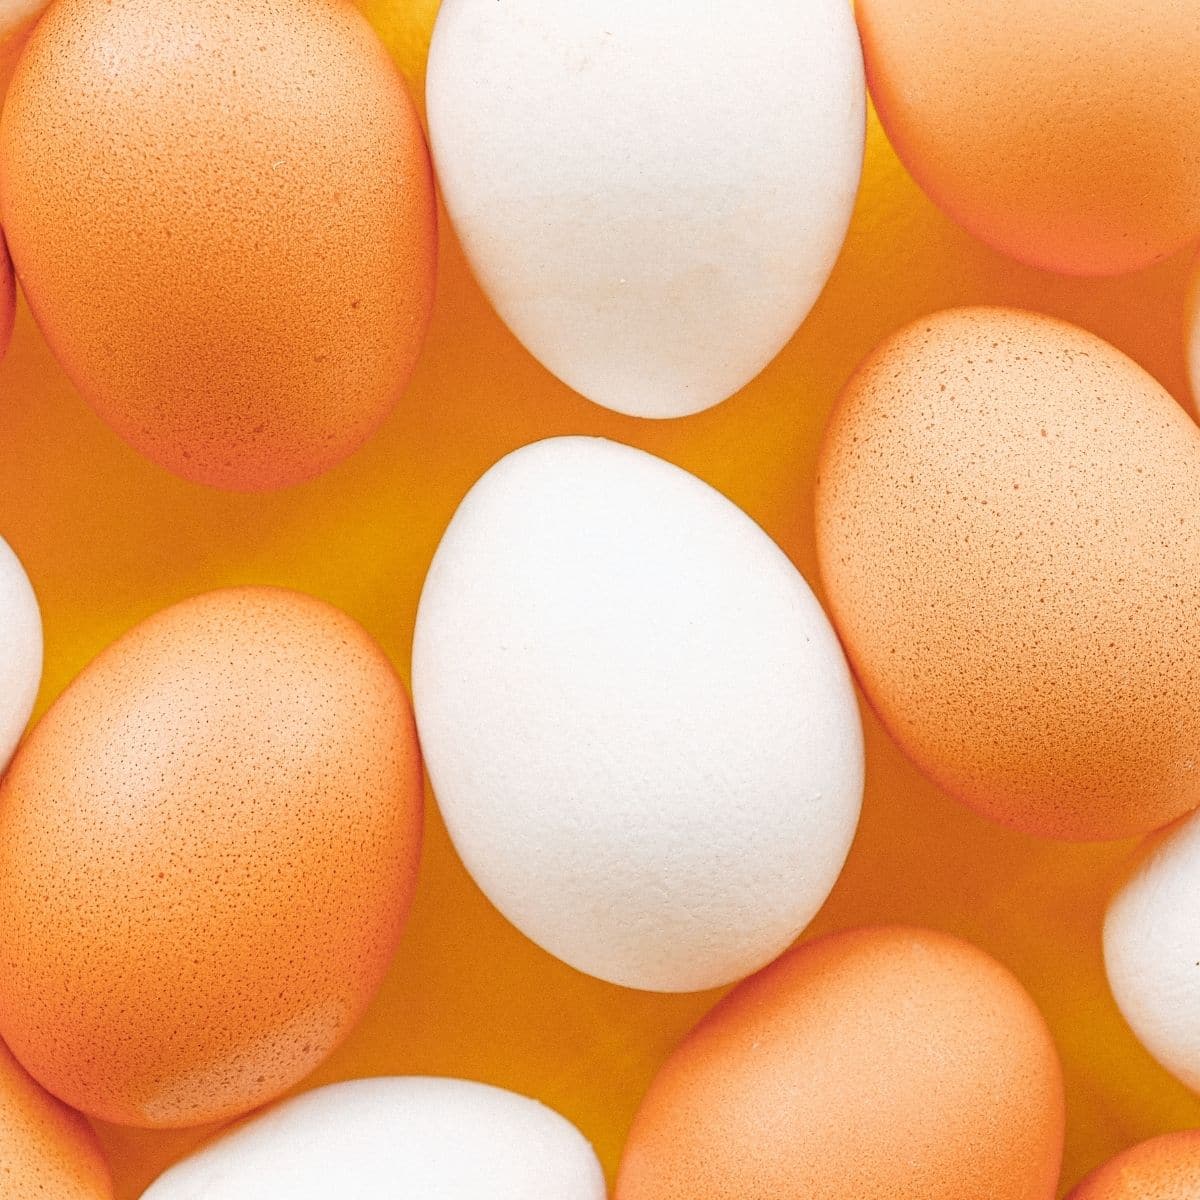 Gambar persegi pengganti eqq terbaik dari berbagai macam telur utuh berwarna coklat dan putih.